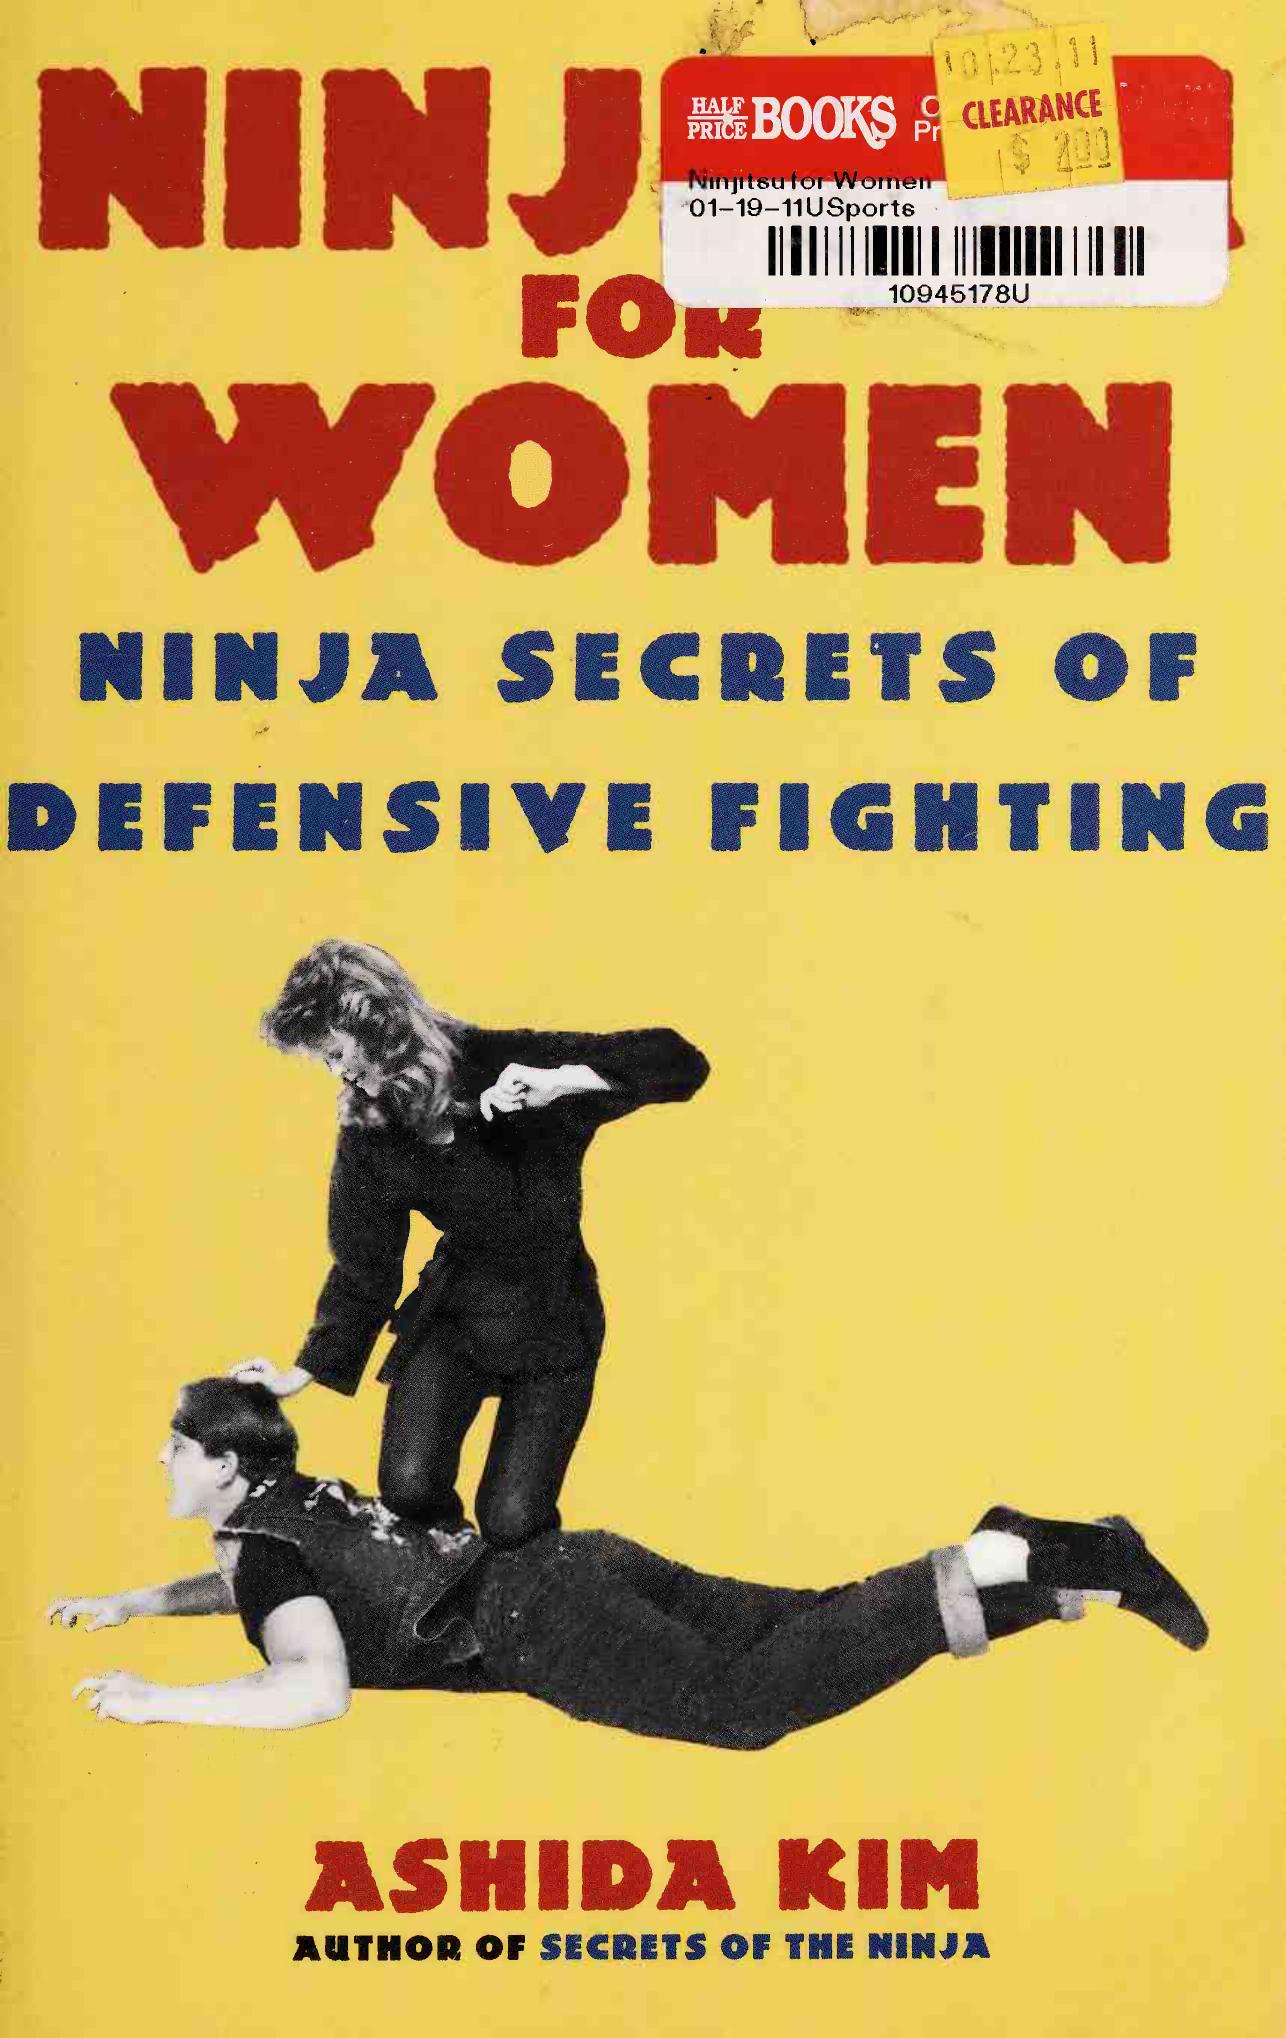 Ninjitsu For Women: Ninja Secrets of Defensive Fighting by Ashida Kim